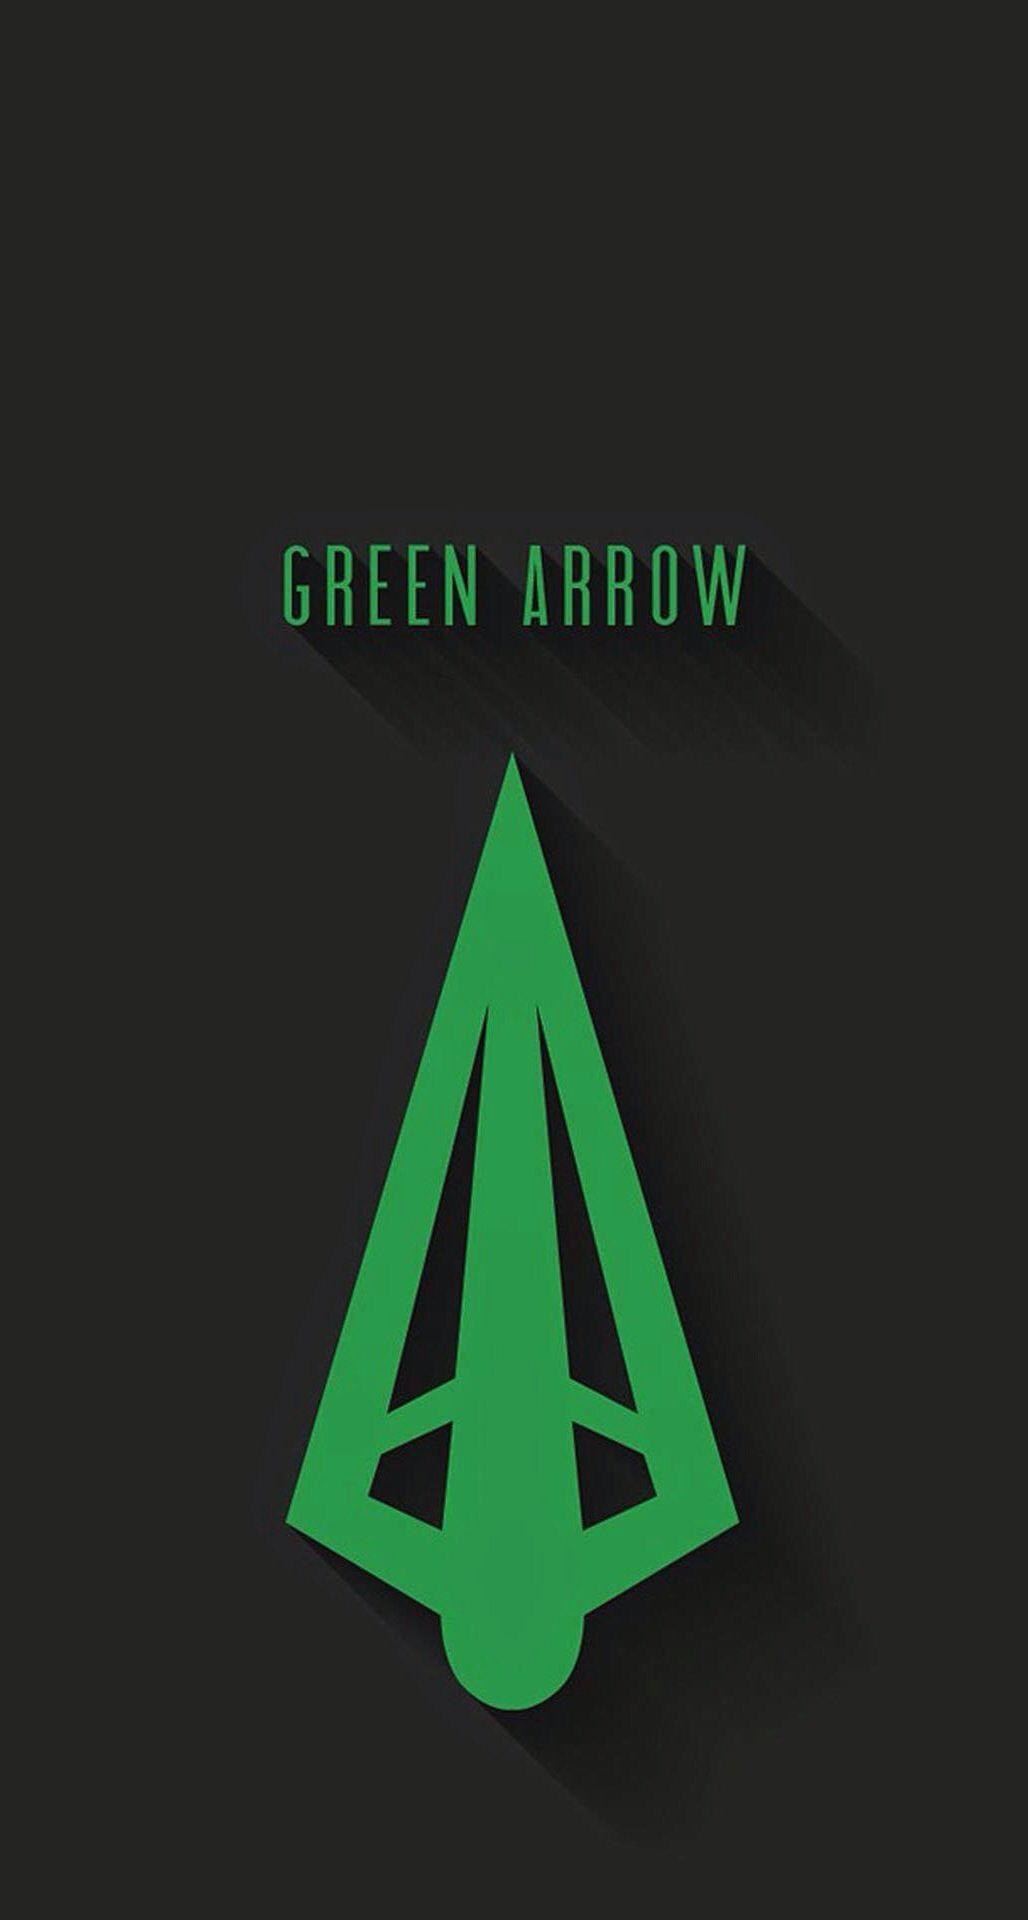 Grren Arrow Logo - Green Arrow icon (Would make a cool Tattoo!) | It's not easy being ...